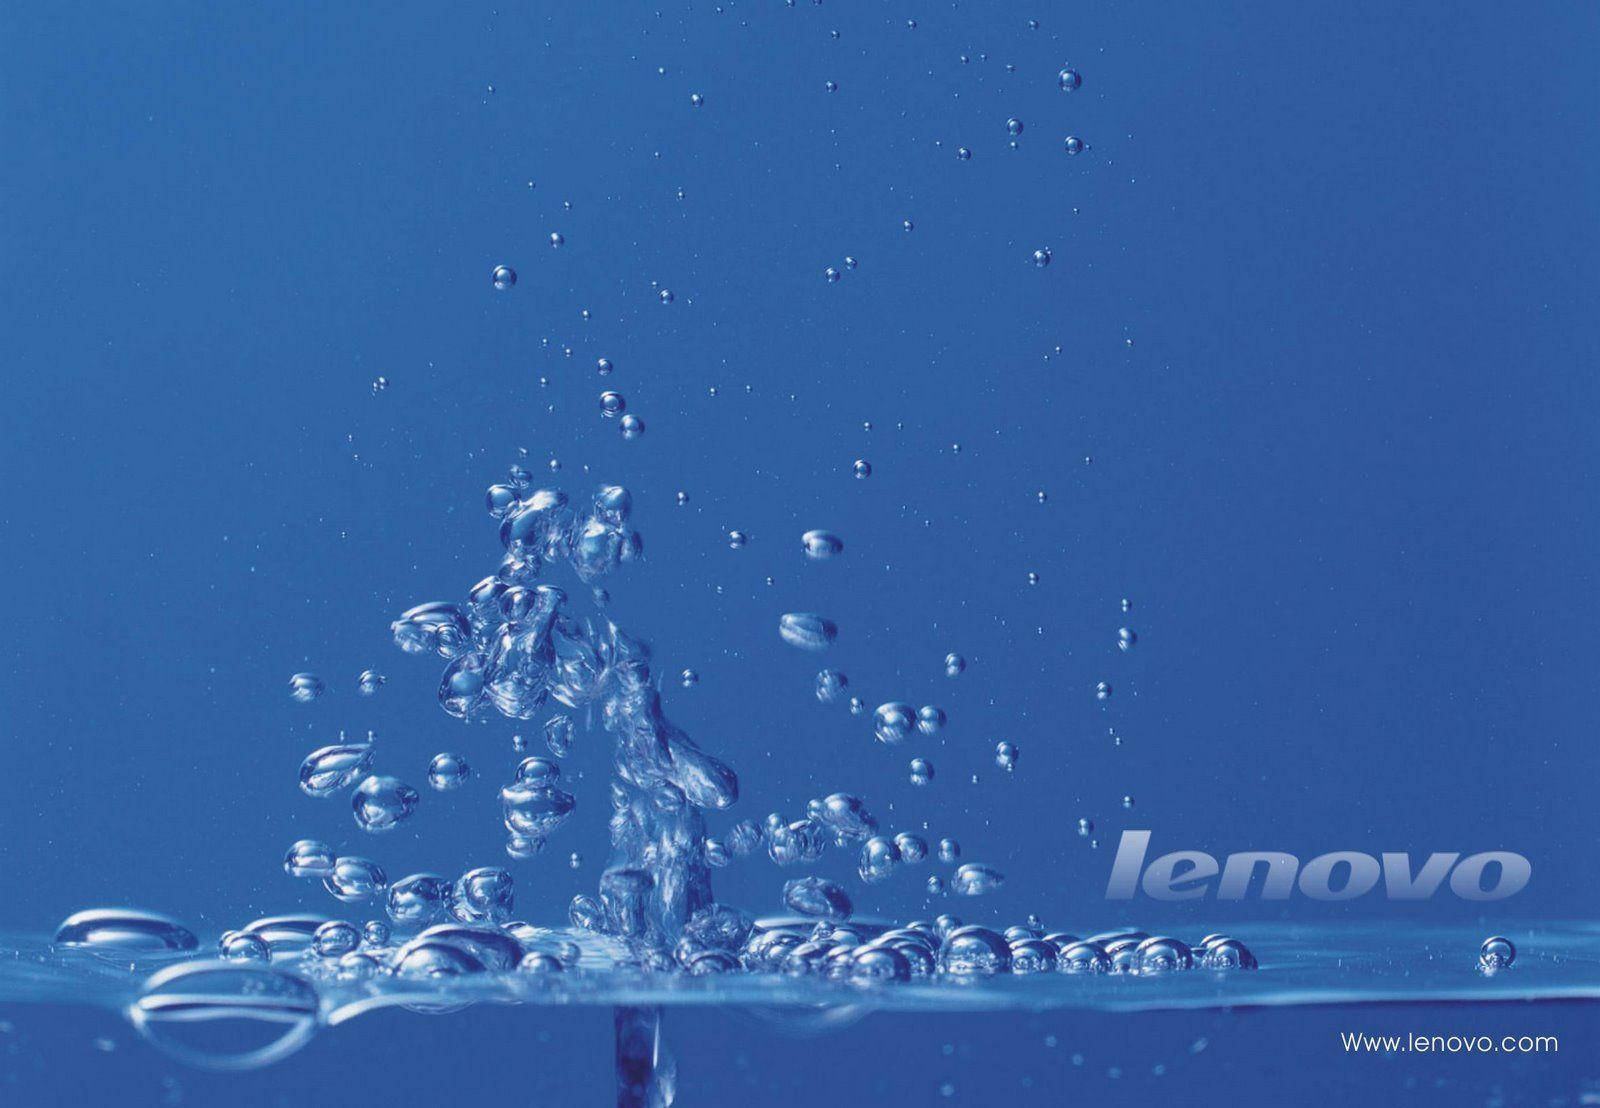 Free Lenovo Hd Wallpaper Downloads, [200+] Lenovo Hd Wallpapers for FREE |  